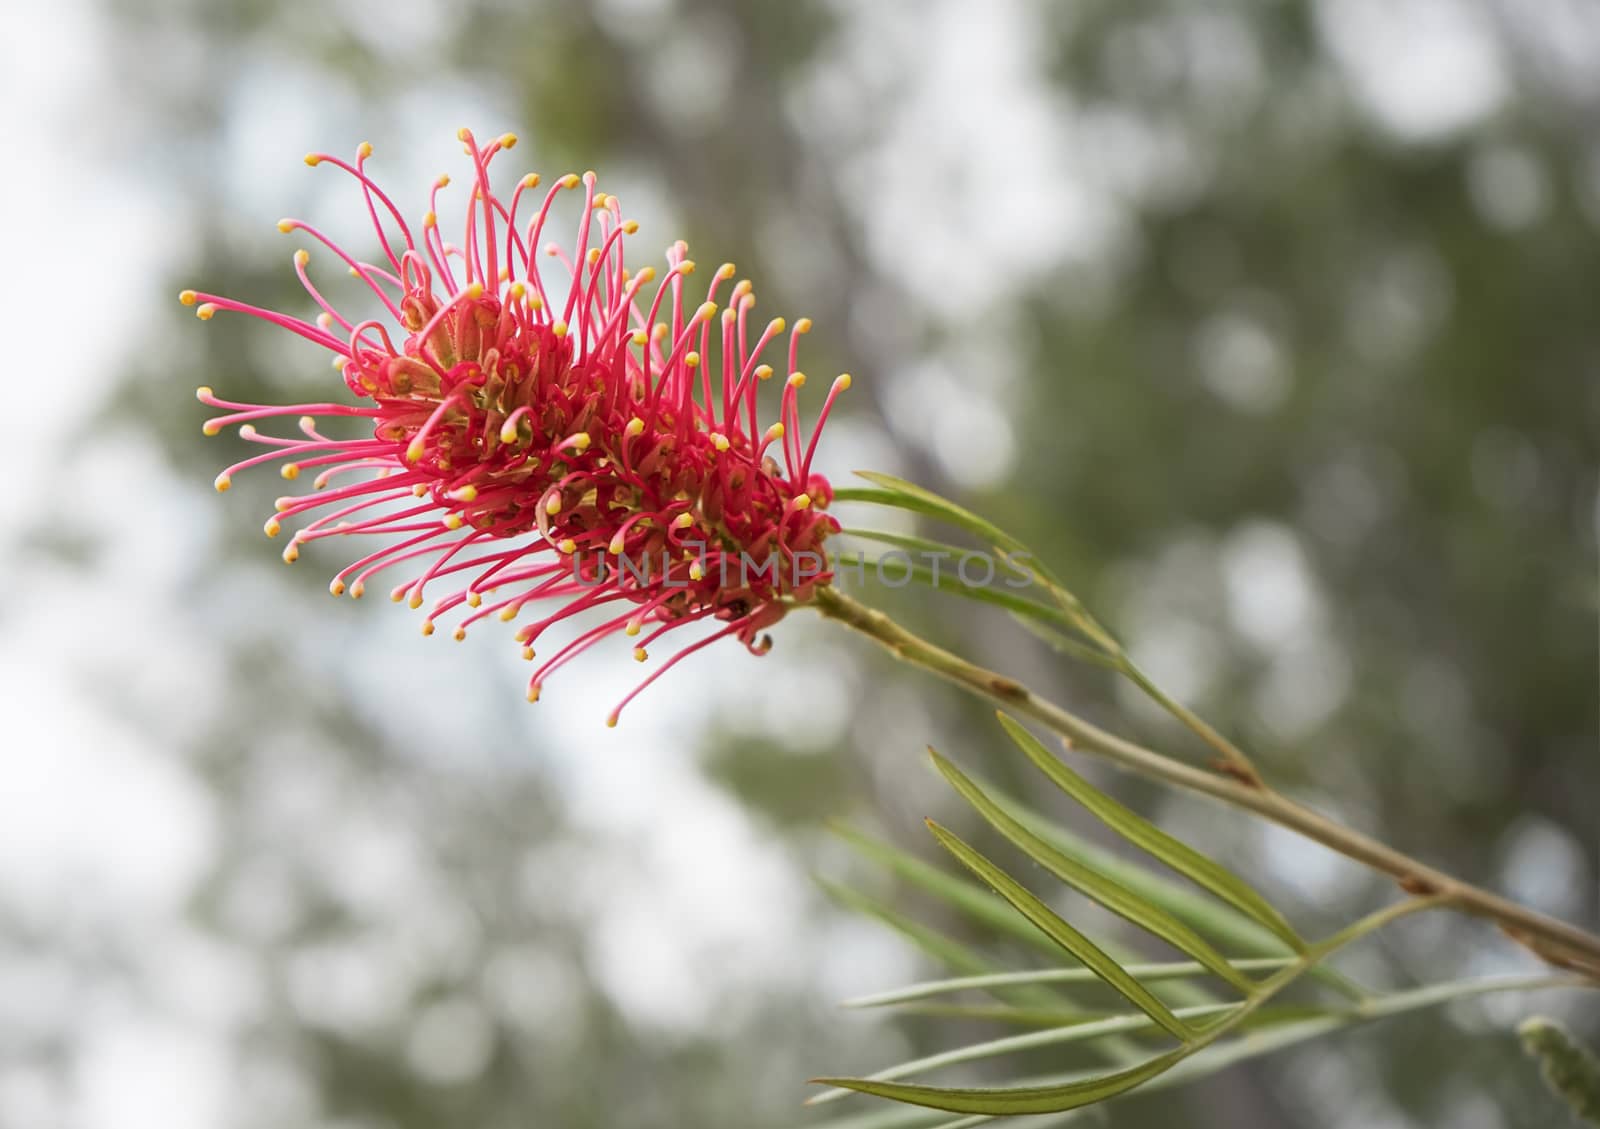 Typical flower head of Australian native wildflower Grevillea species